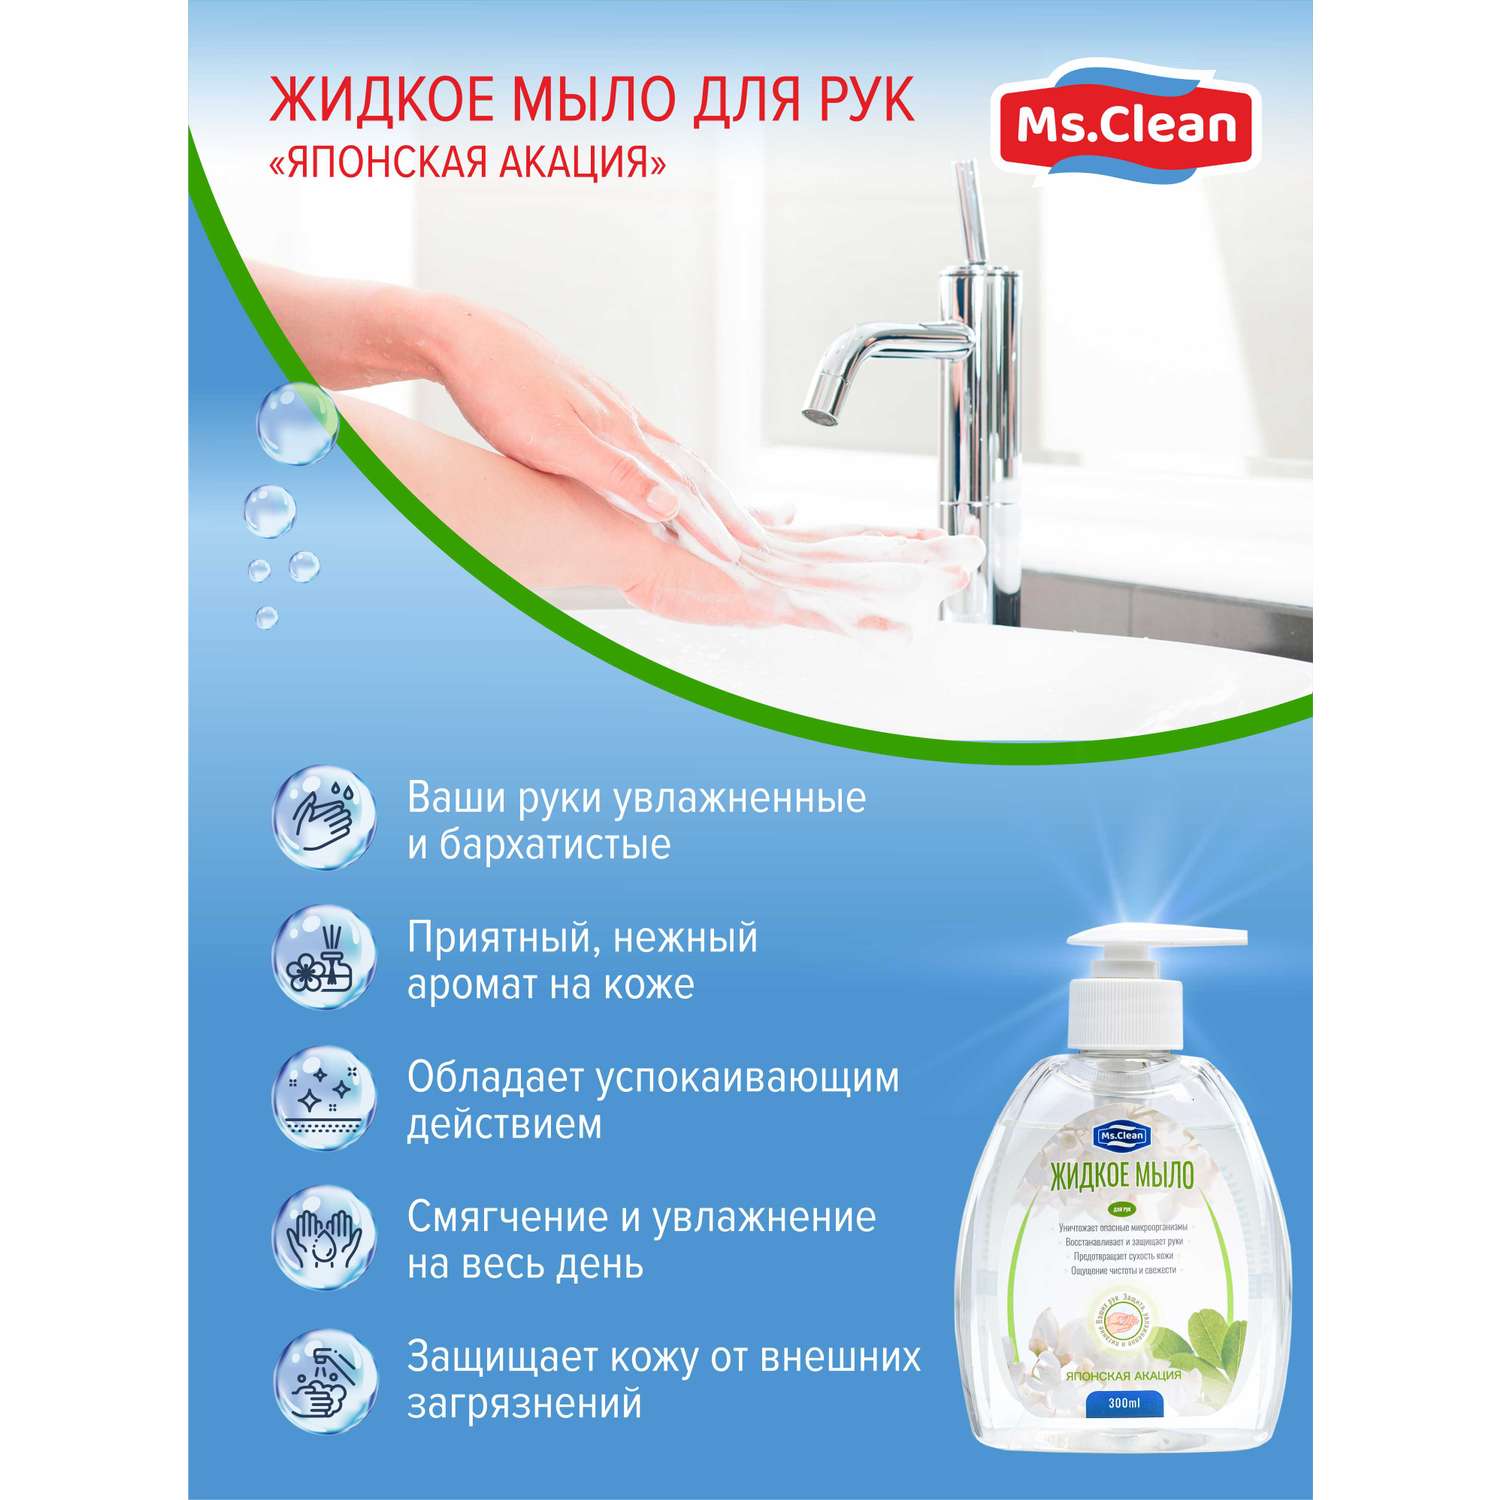 Жидкое мыло для рук Ms.Clean Японская акация 300 мл - фото 4